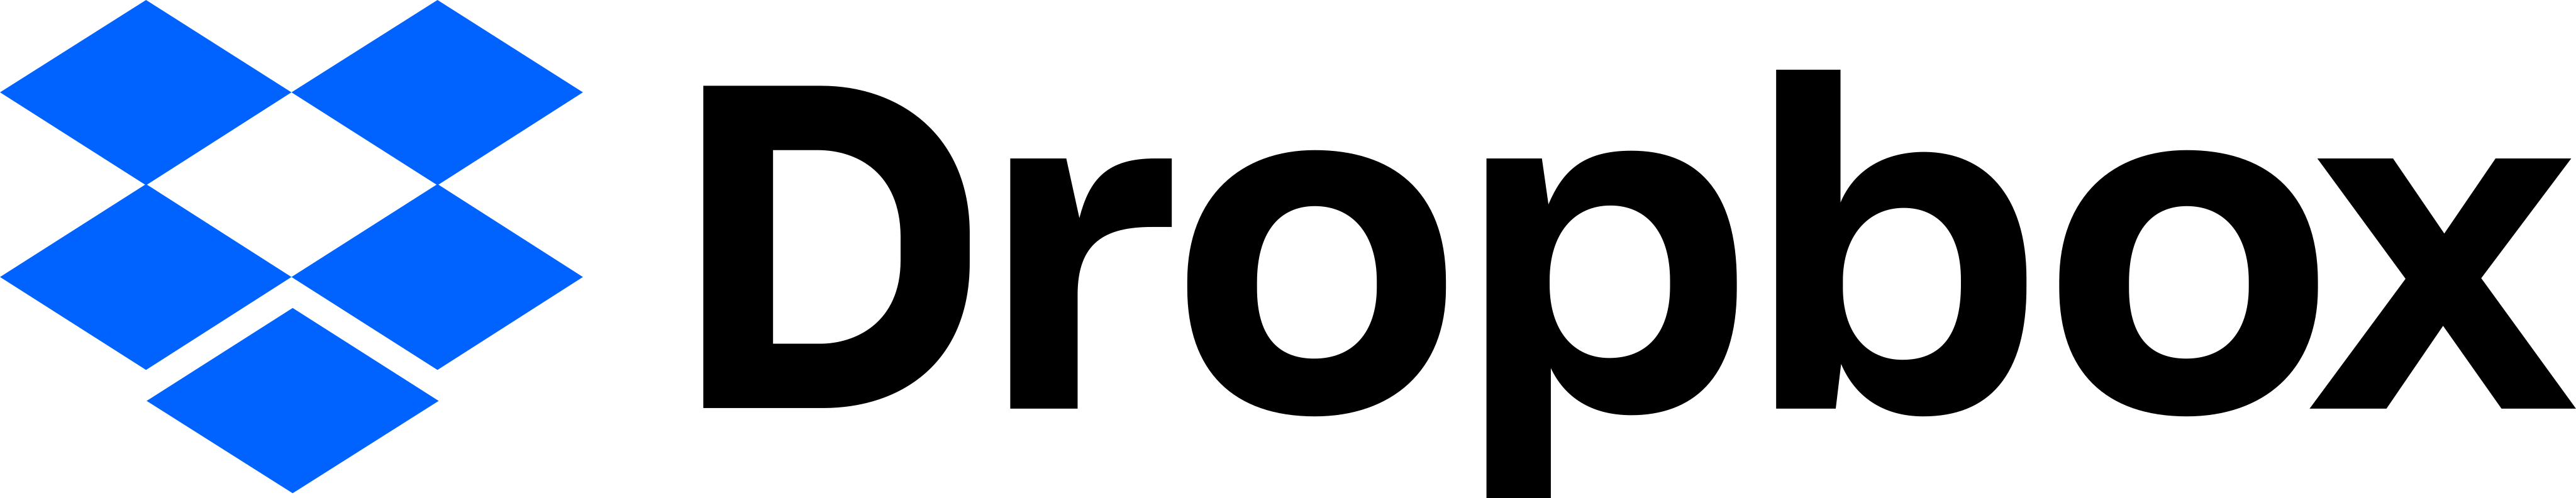 dropbox logo - Dropbox Logo